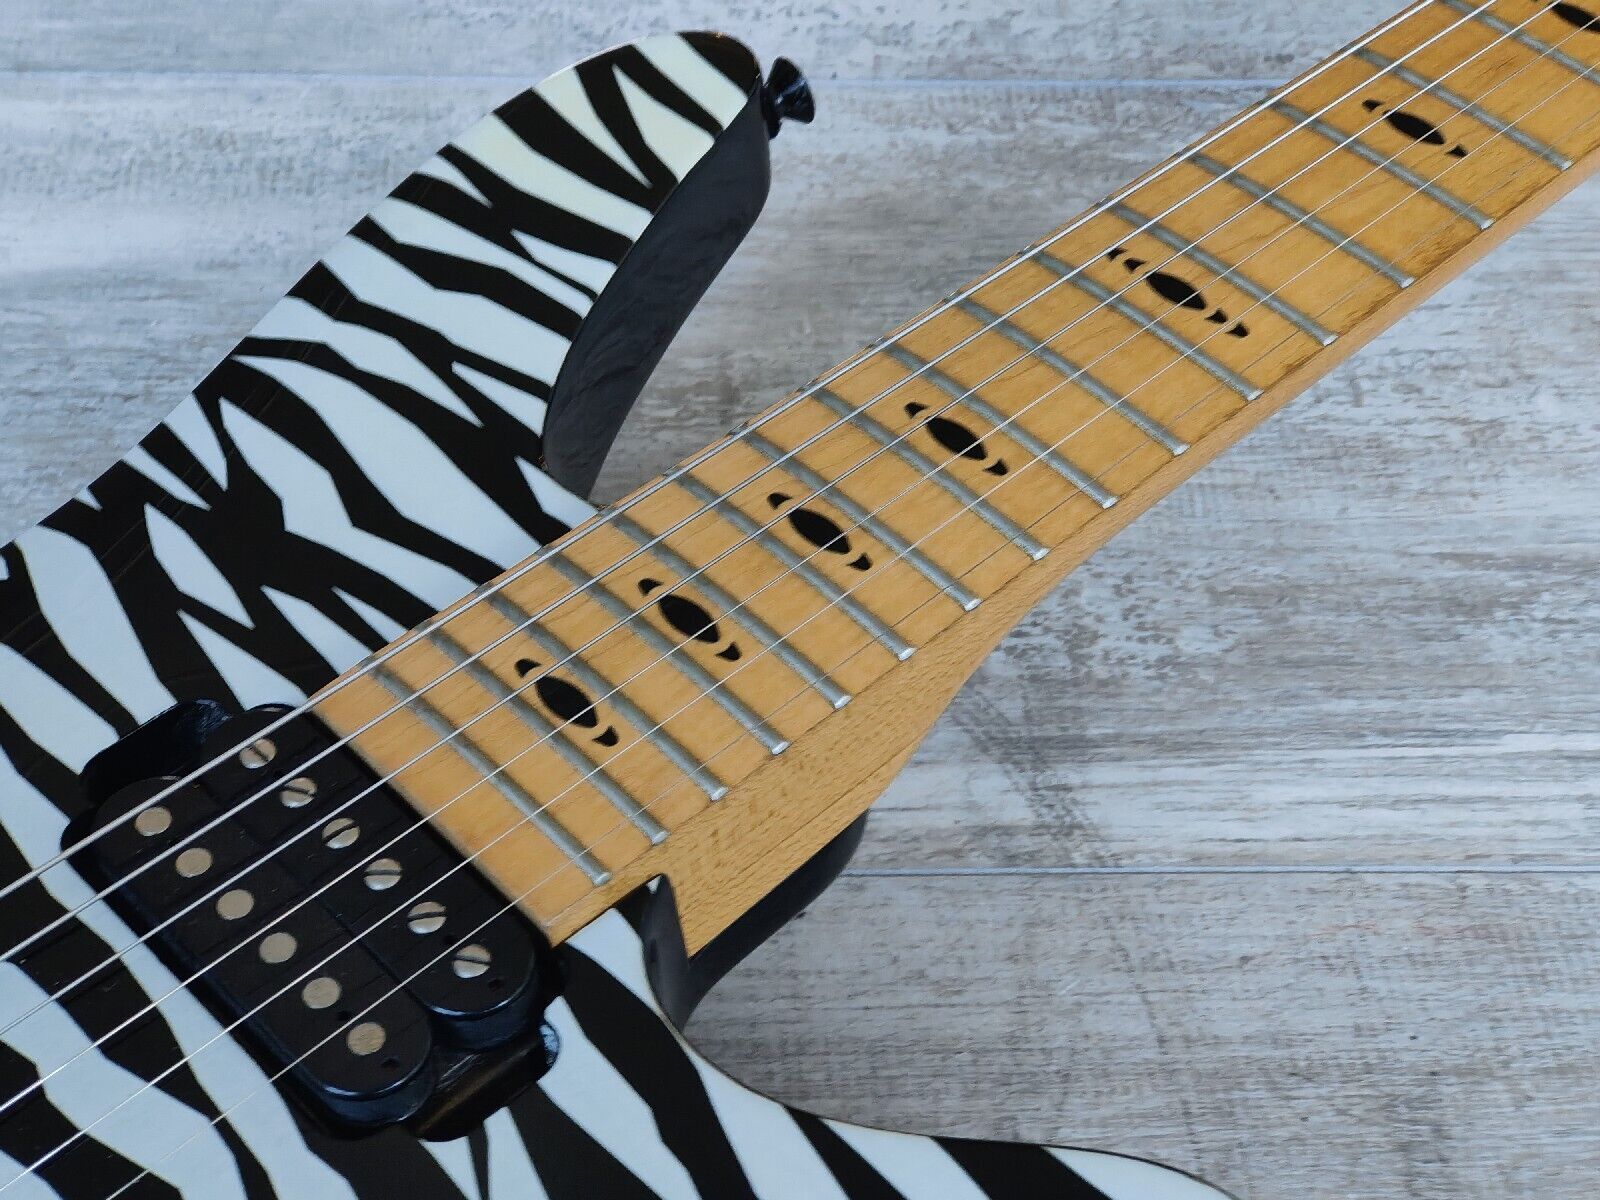 1994 Yamaha Japan MGM111 Special Edition Electric Guitar (Zebra Stripe)